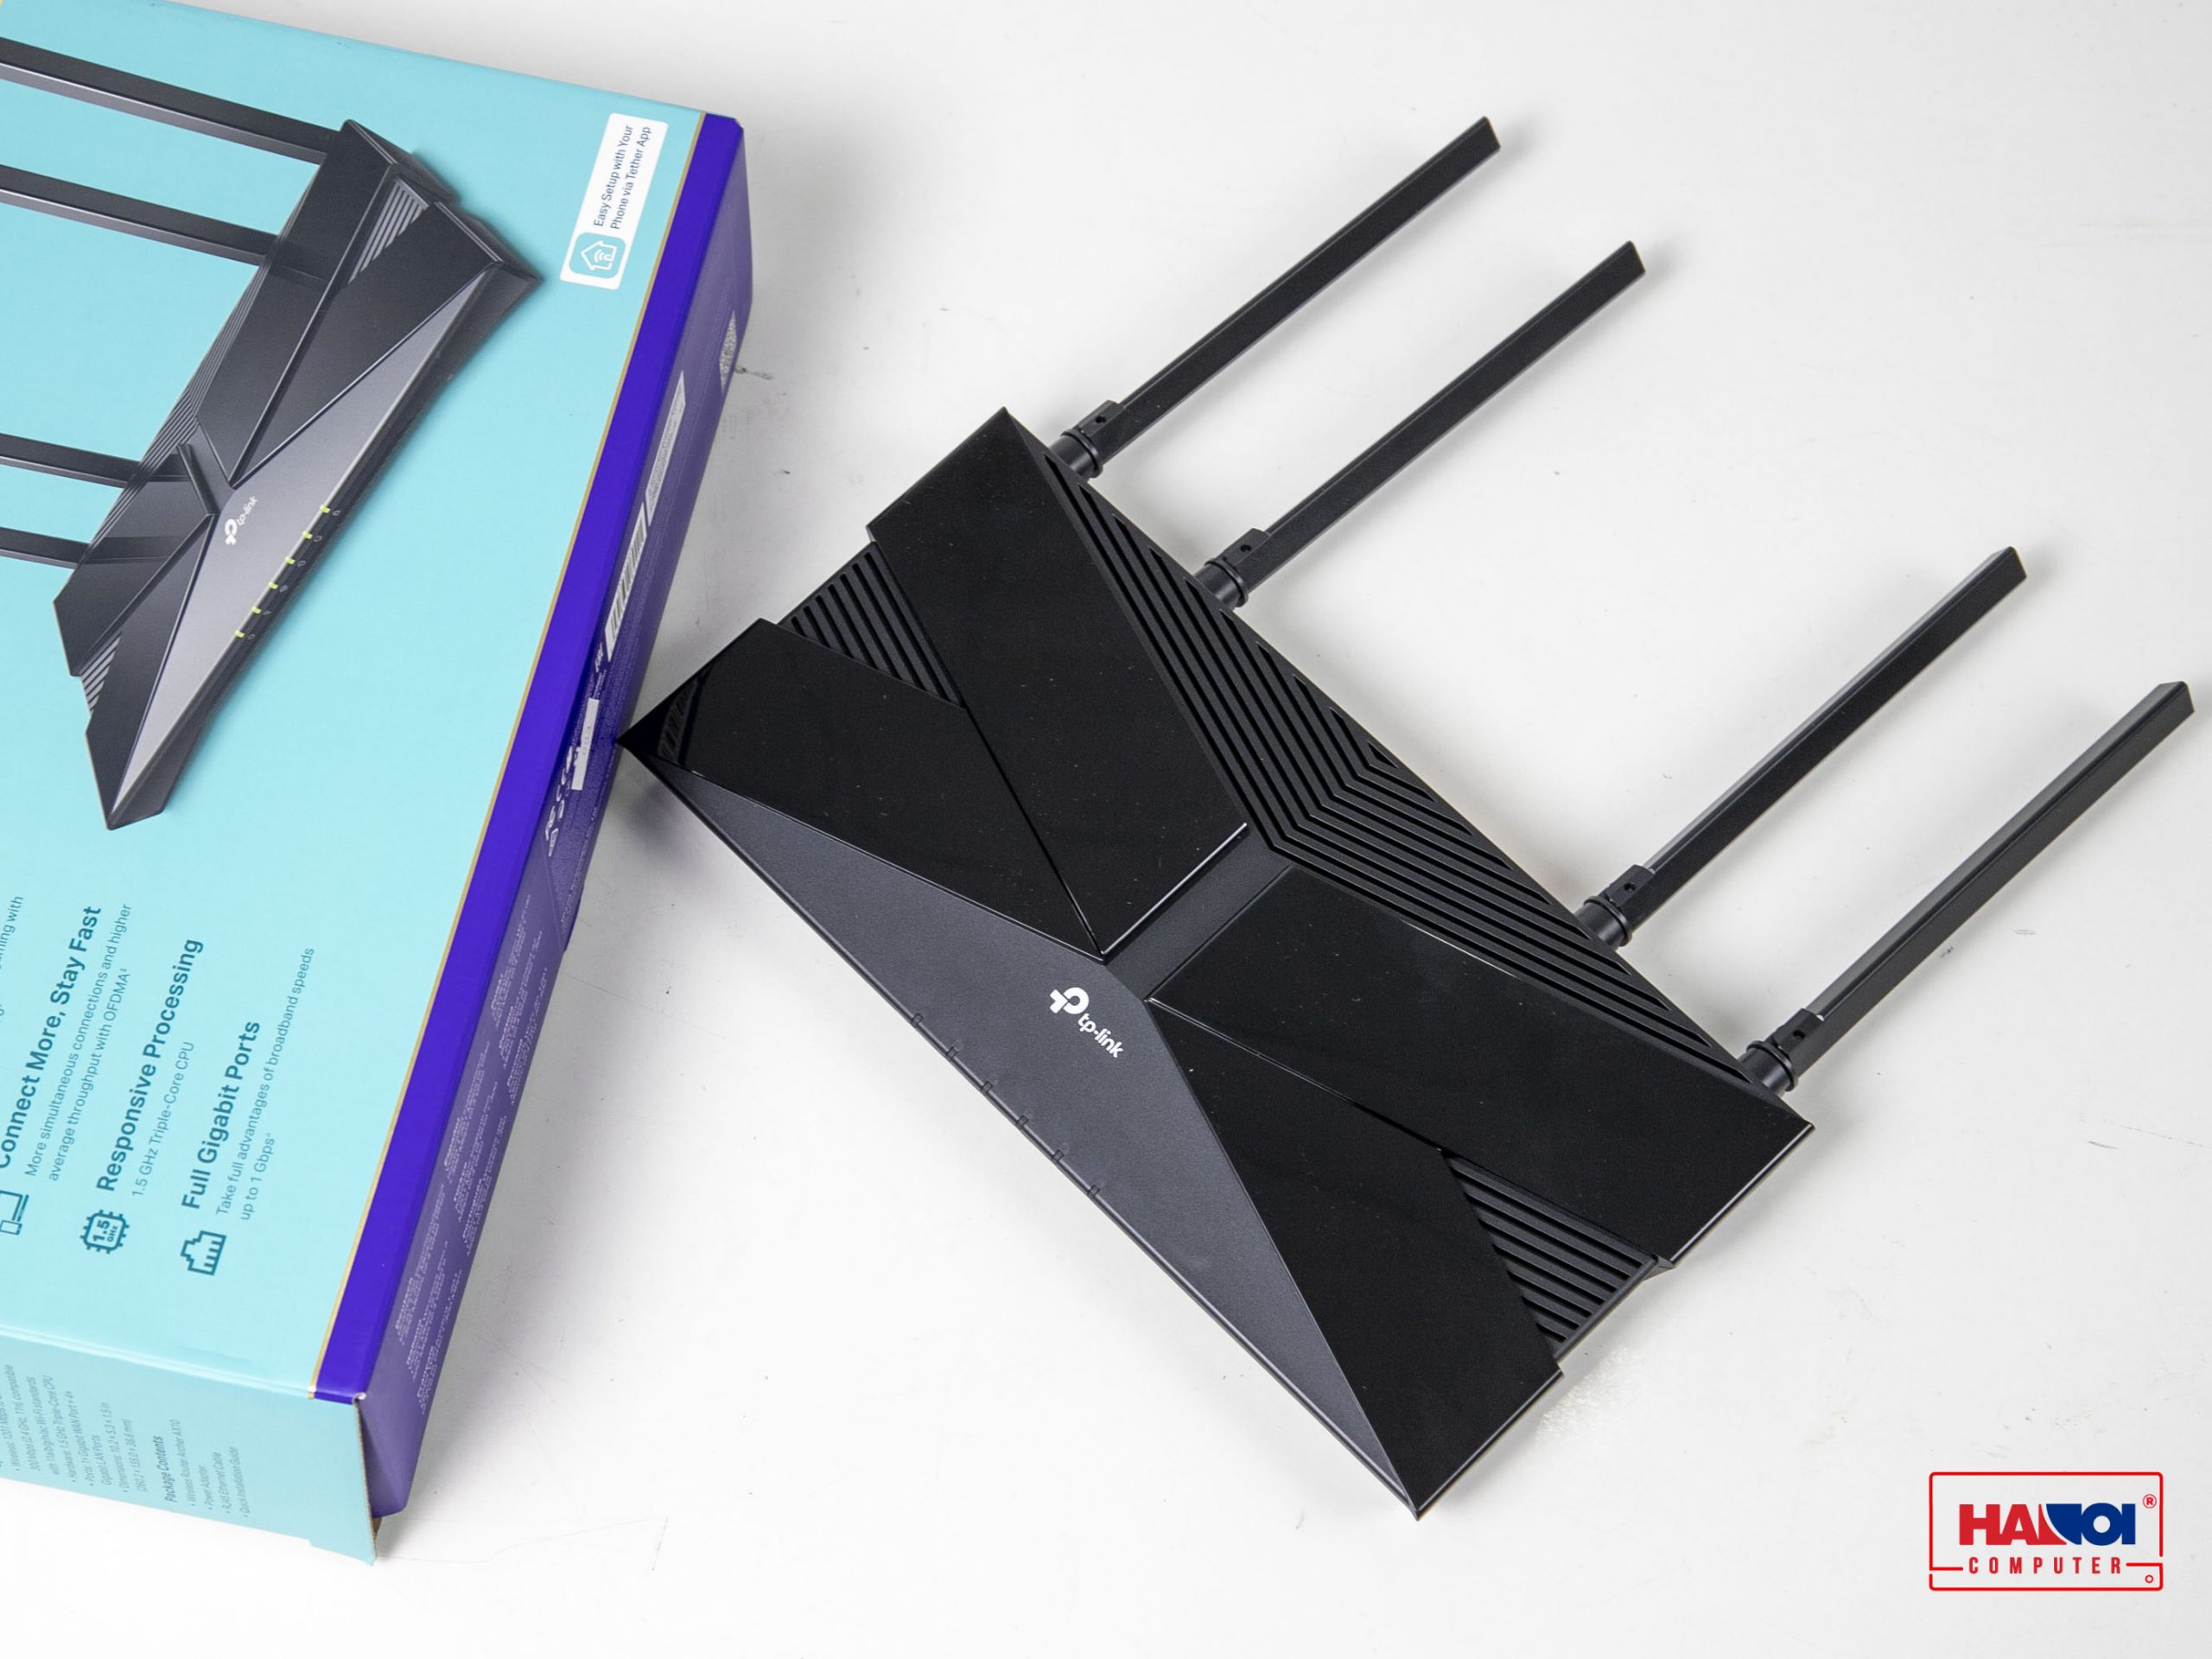 Bộ phát wifi TP-Link Archer AX10 (Wi-Fi 6, AX1500)